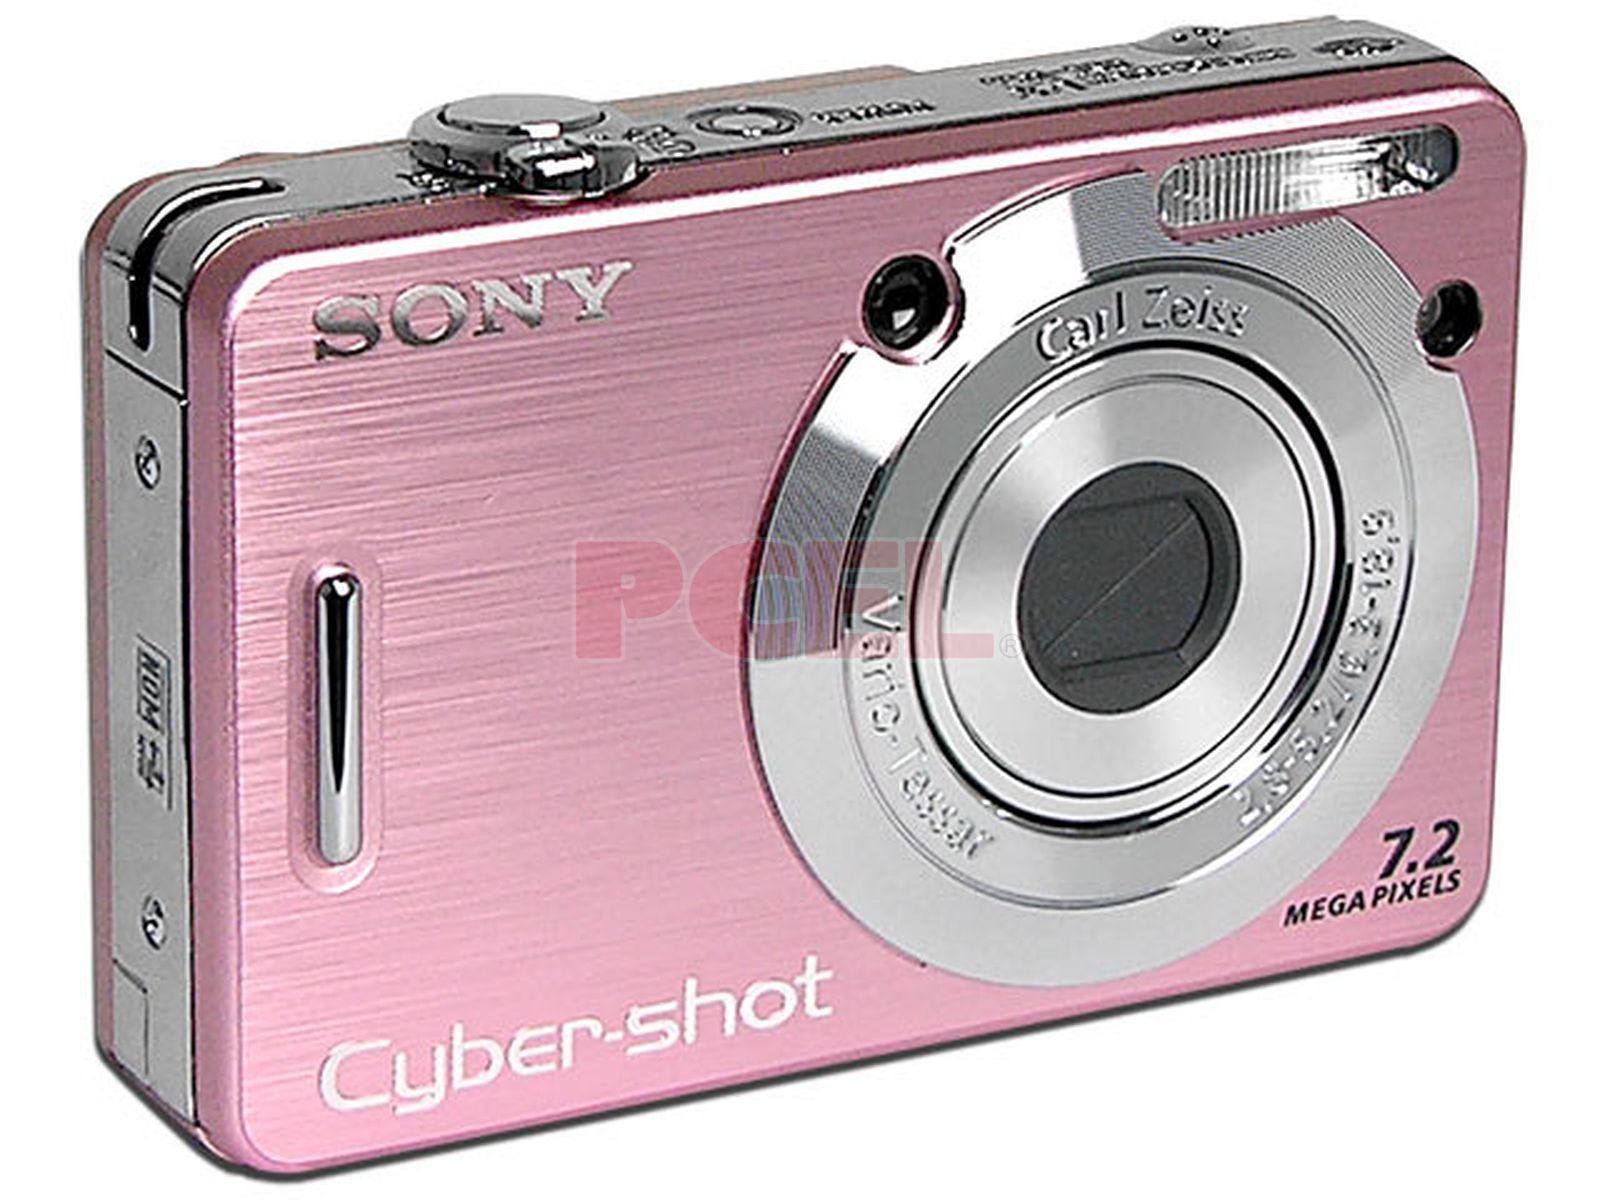 Cámara Fotográfica Digital Sony Cyber-Shot DSC-W55, 7MP. Color Rosa